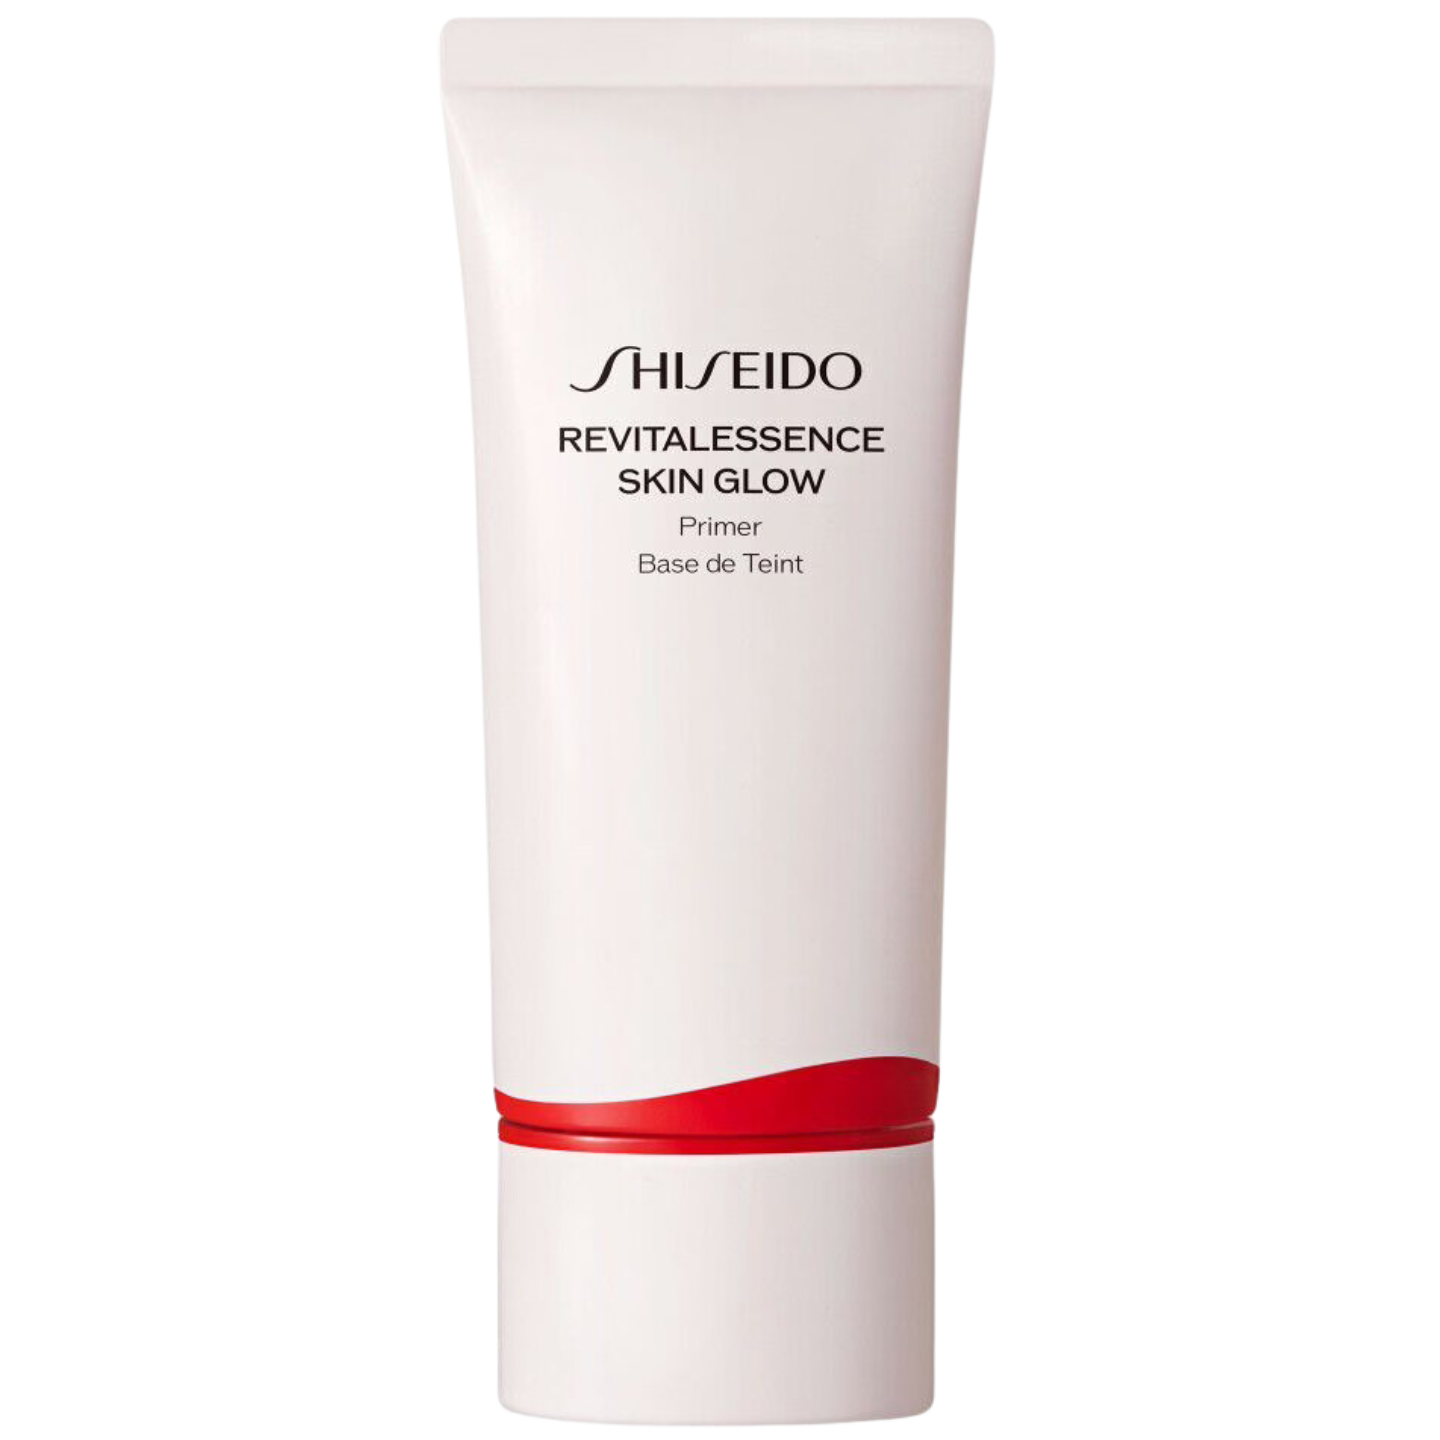 Shiseido Revitalessence Skin Glow Primer